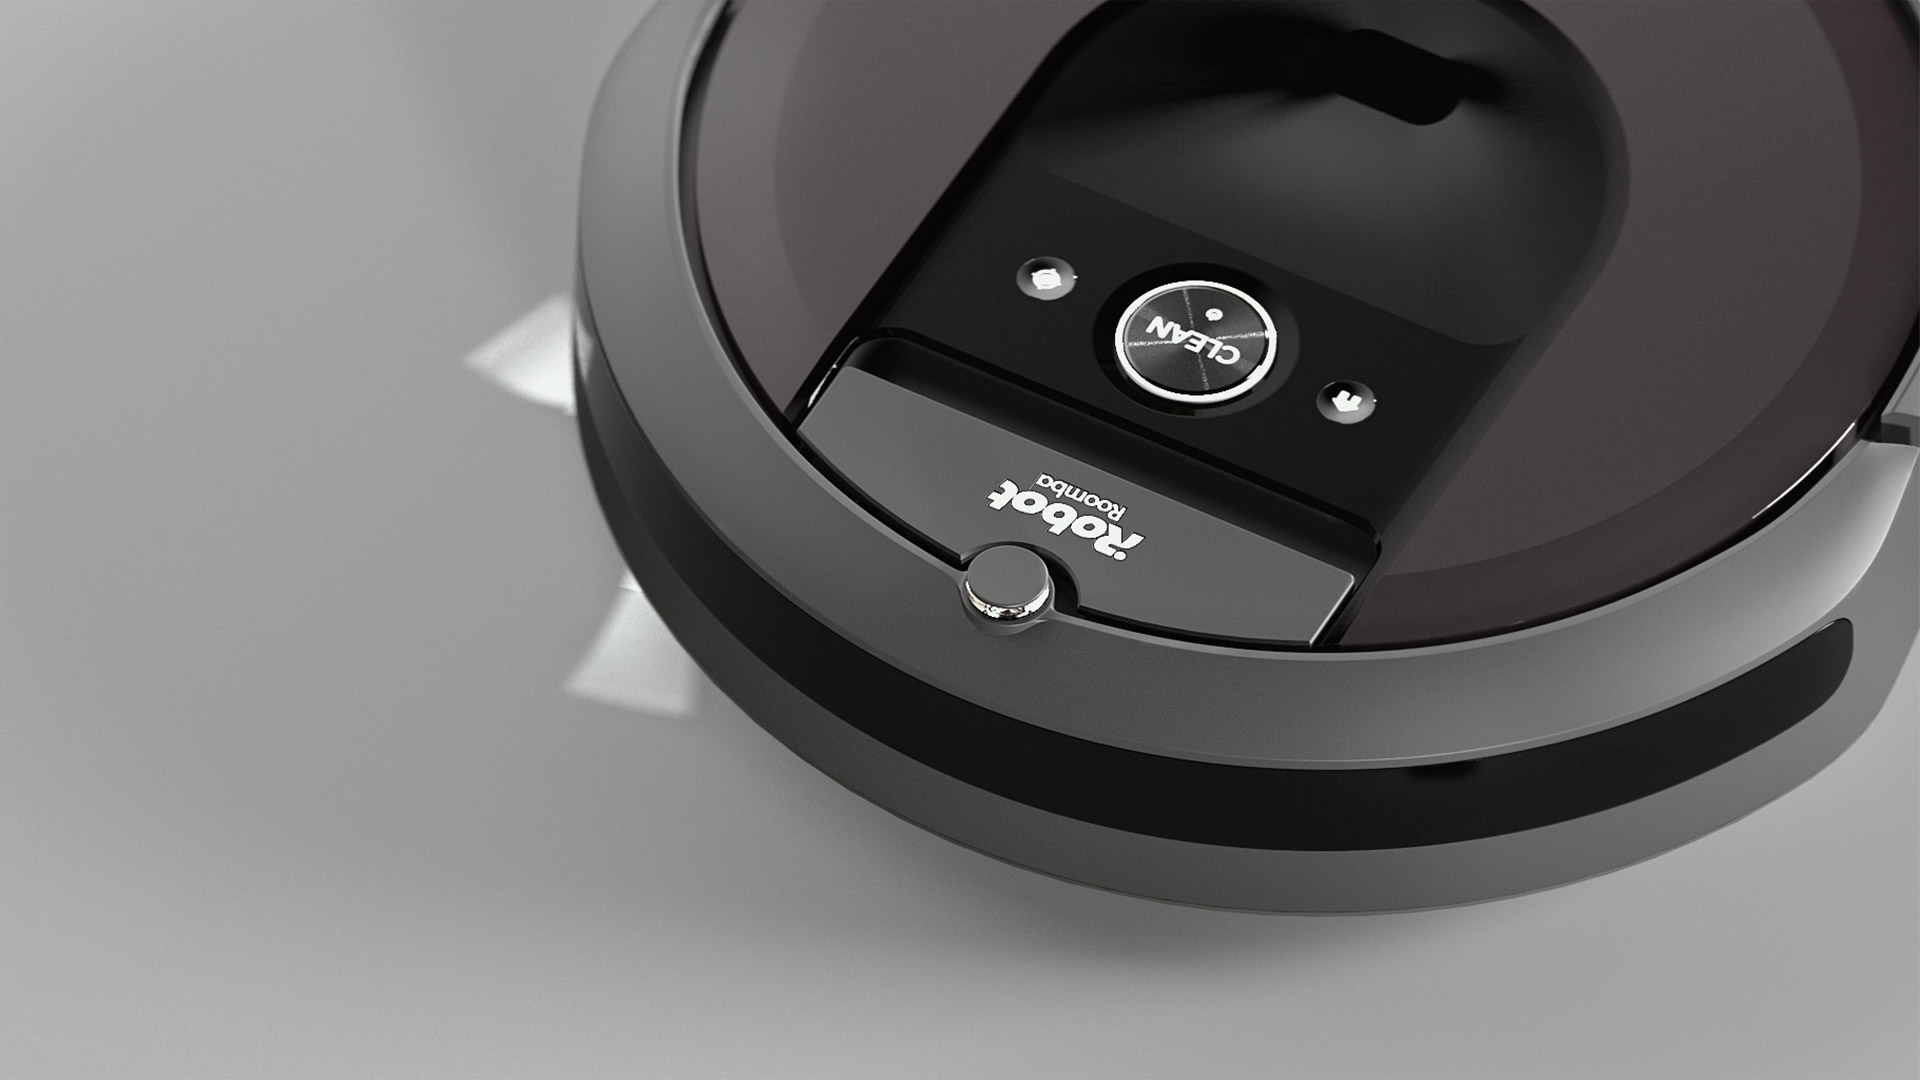 A rendering of a iRobot Roomba robot vacuum.